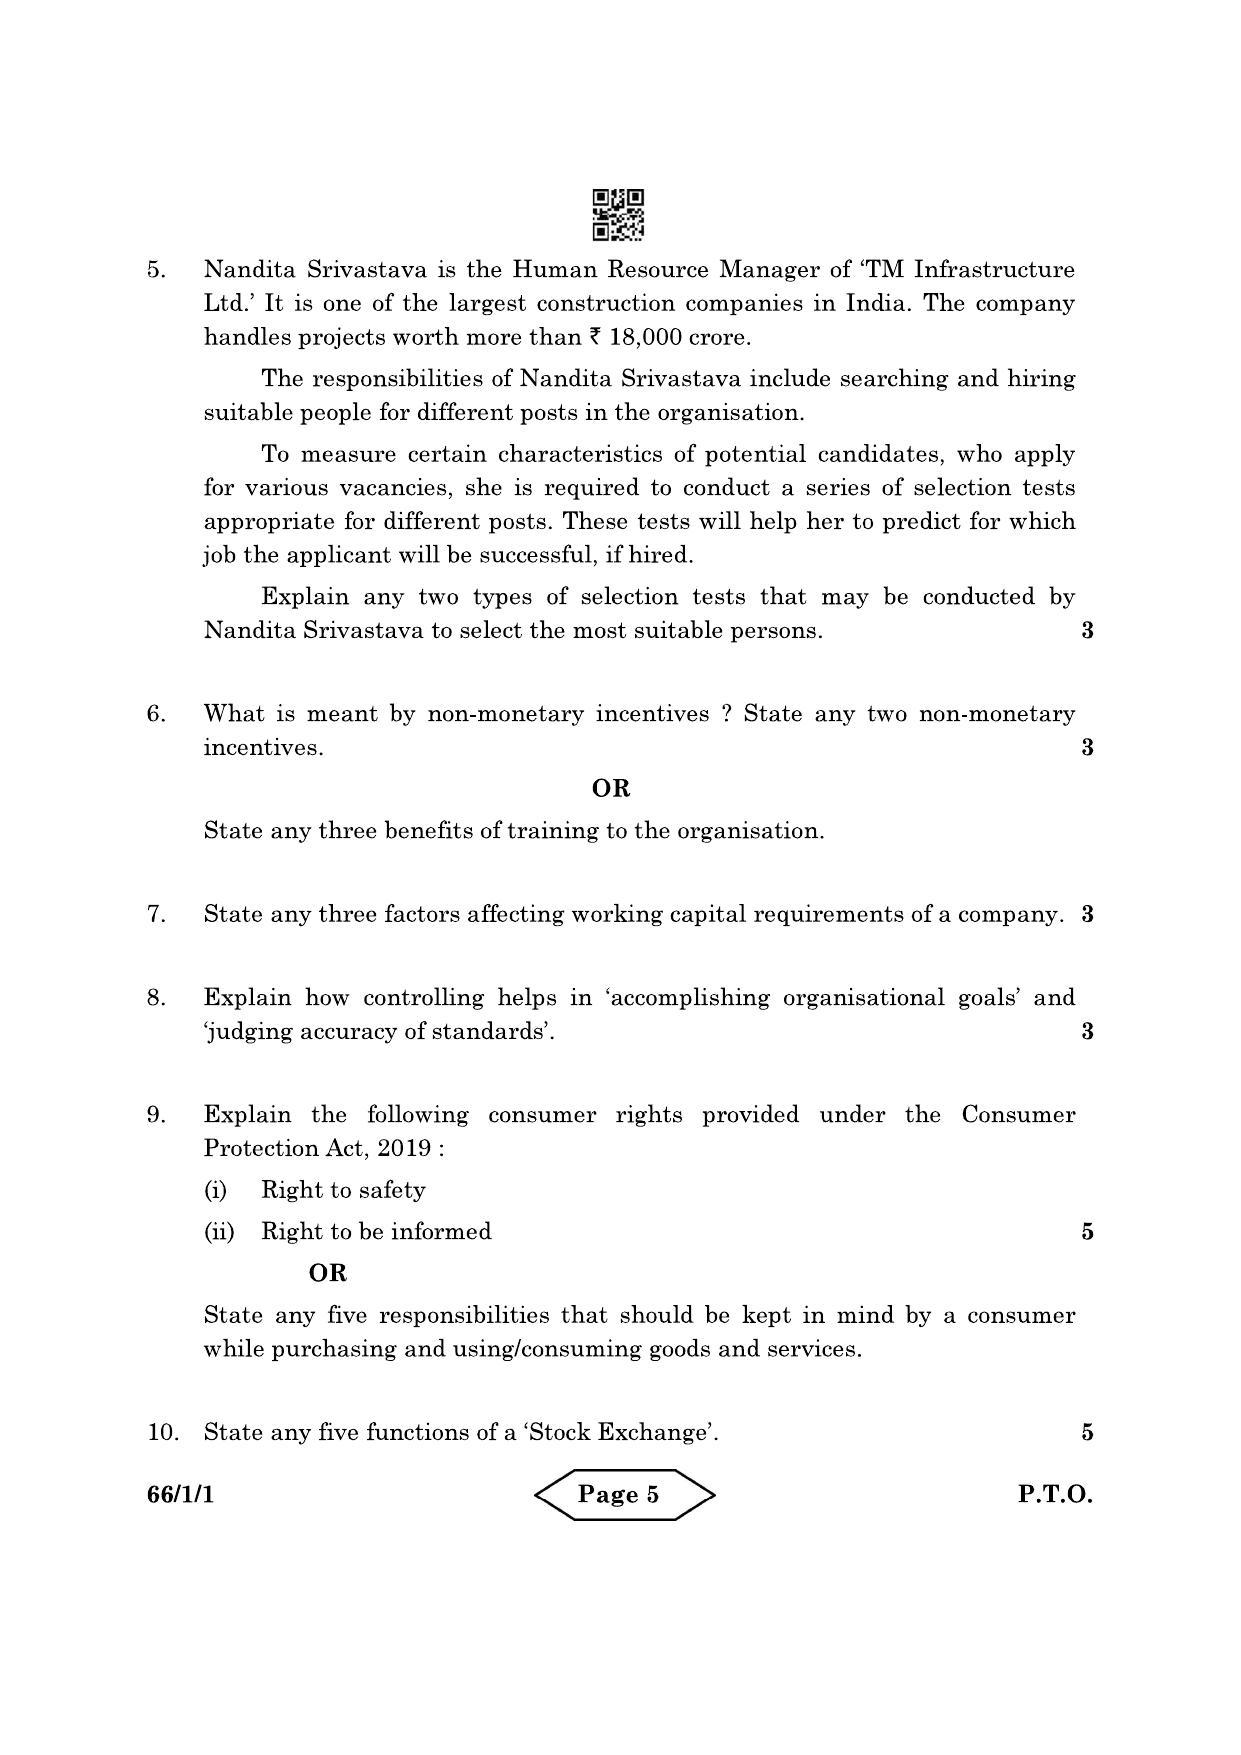 CBSE Class 12 66-1-1 Business Studies 2022 Question Paper - Page 5